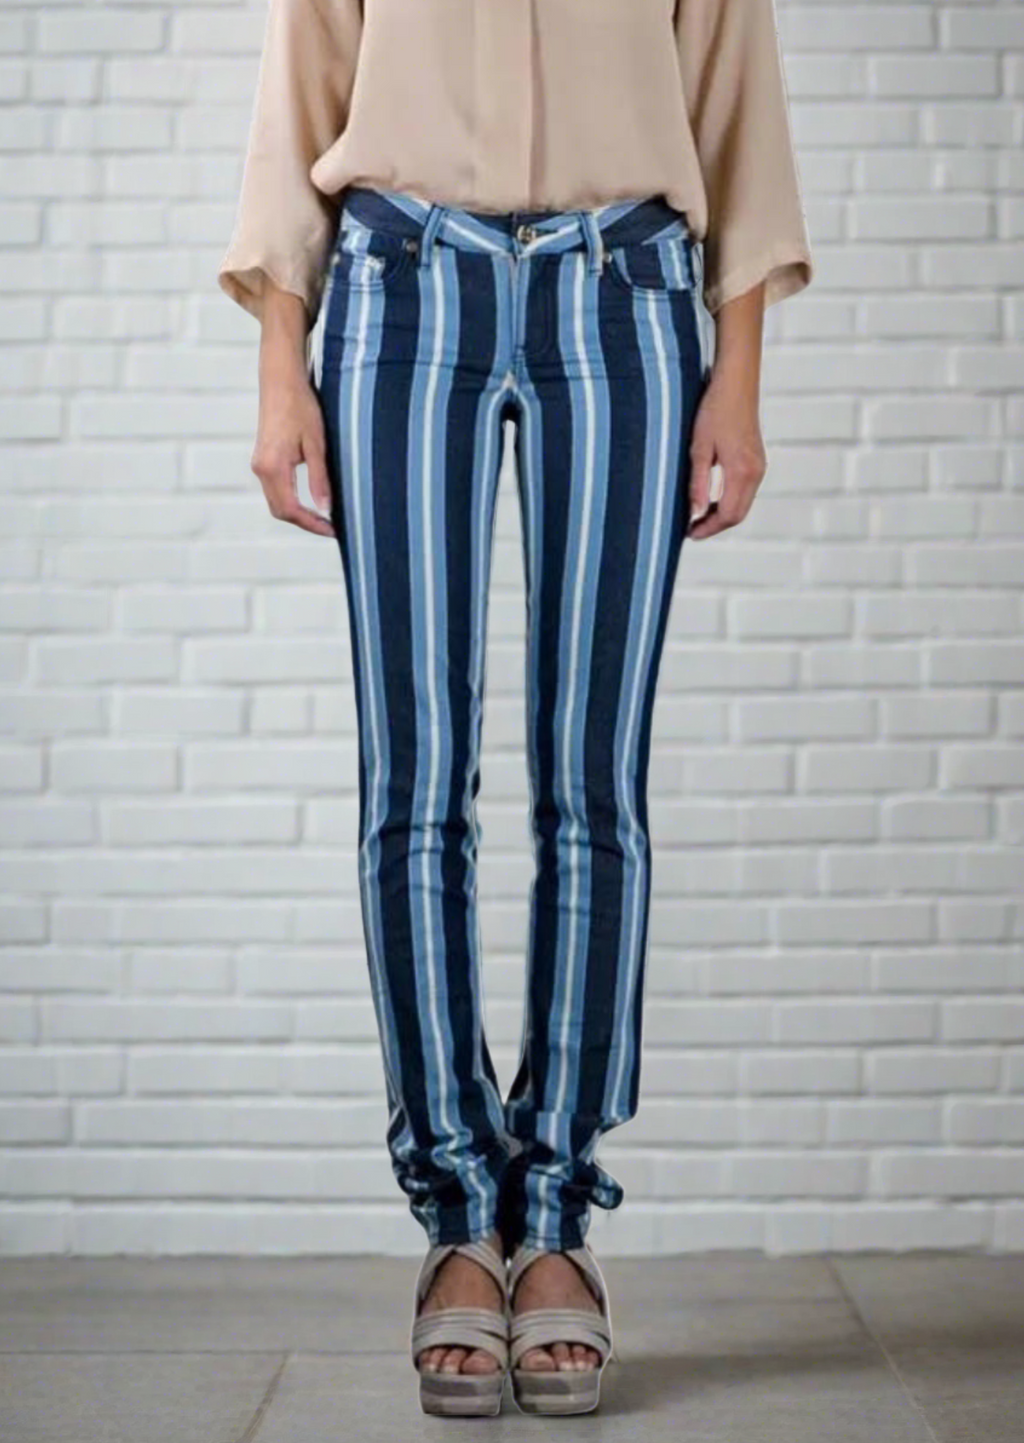 Tory Burch Skinny Blue/Denim Striped Jeans